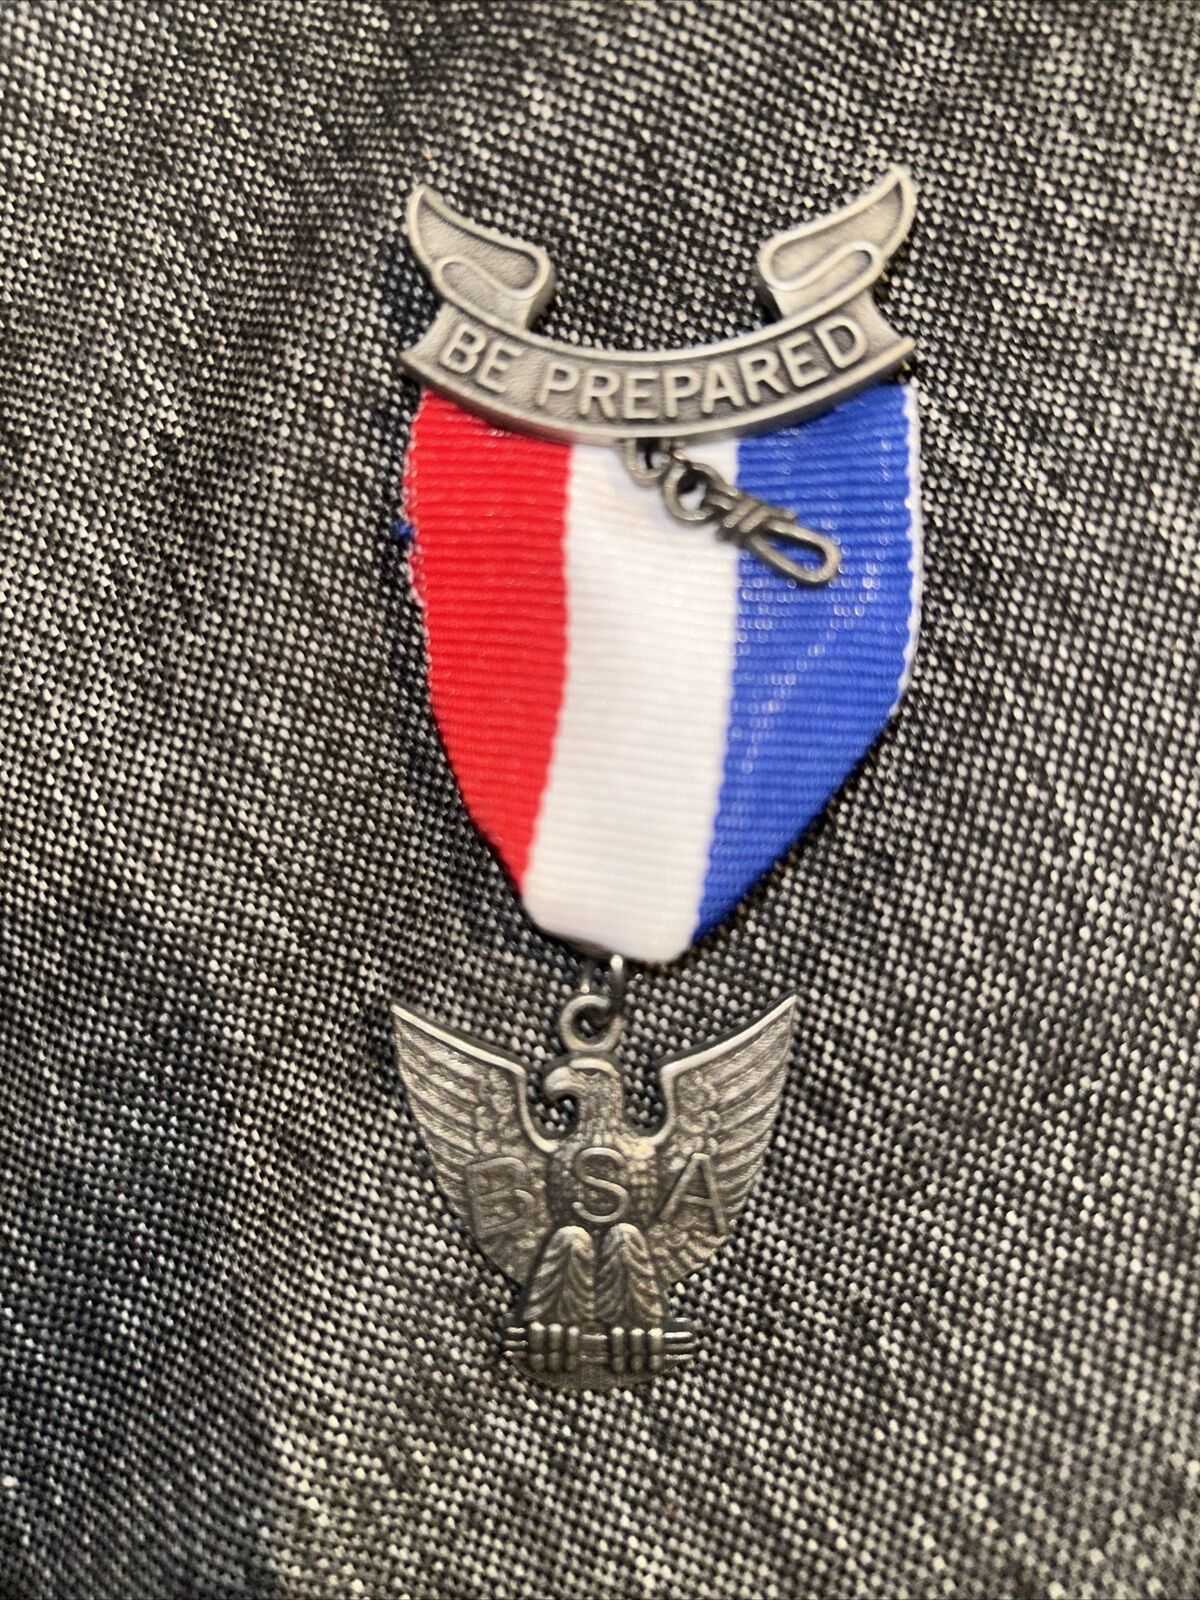 Current  Style Boy Scout Eagle Medal Scouts BSA #D